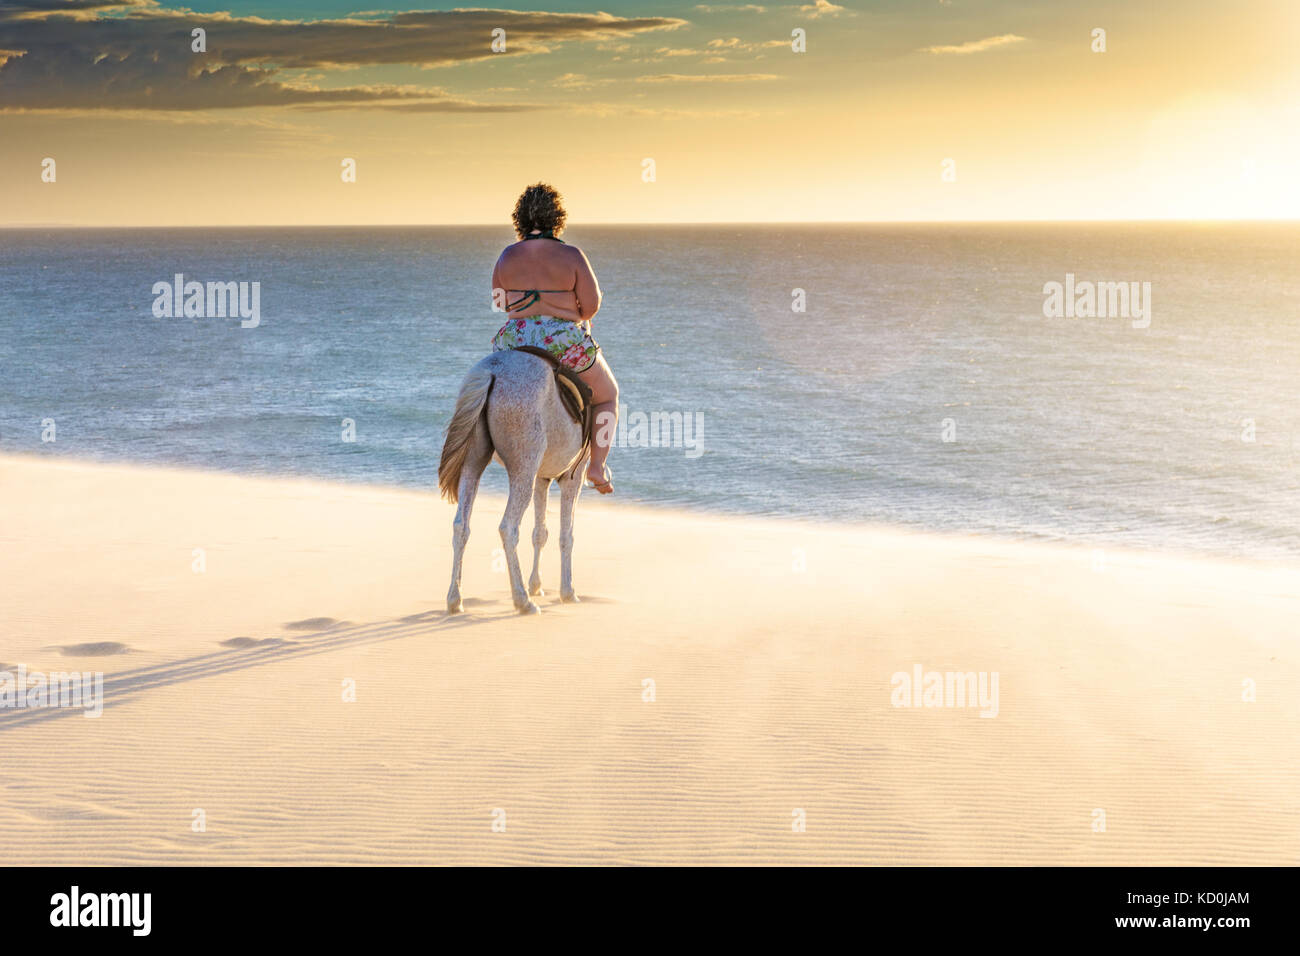 Woman riding horse on beach, rear view, Jericoacoara, Ceara, Brazil, South America Stock Photo